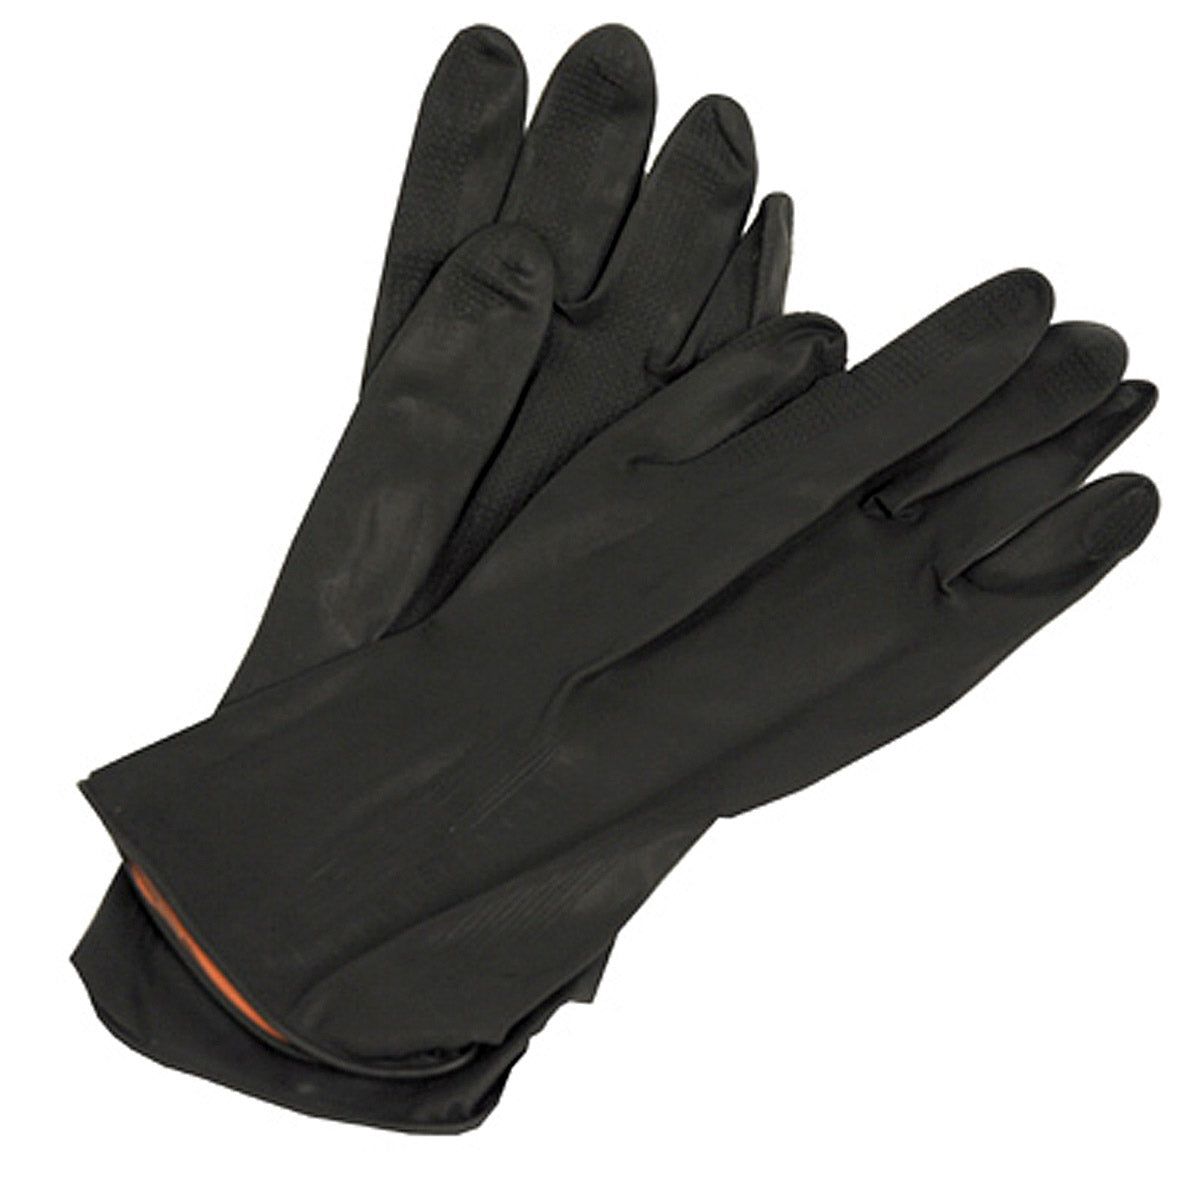 Latex valeting gloves